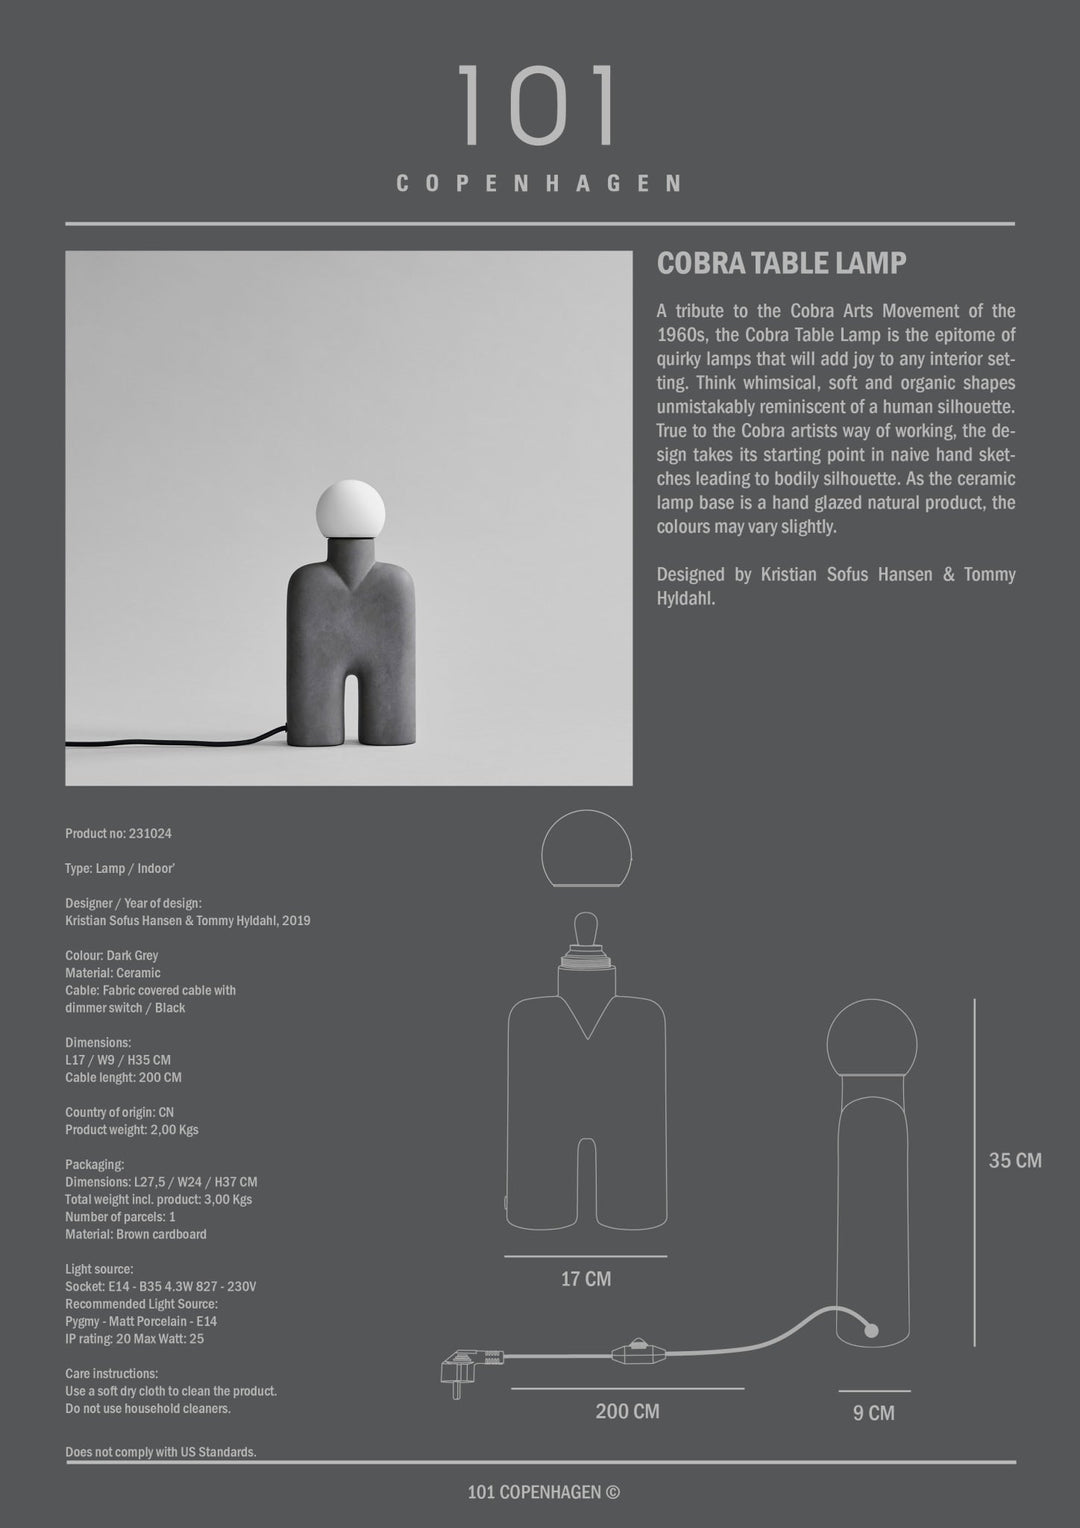 101 Copenhagen Cobra Table Lamp - $215.00